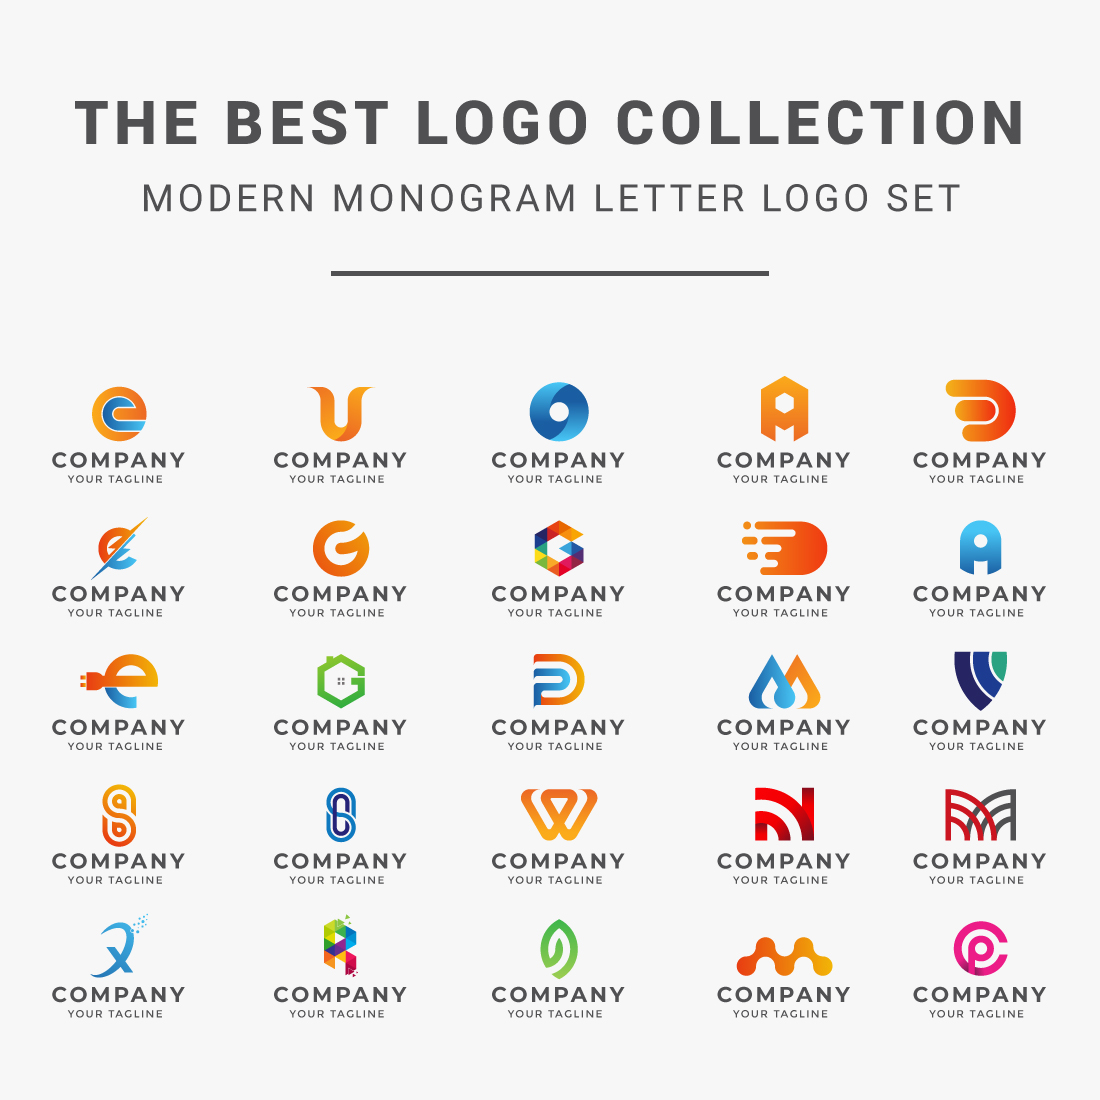 25 Logos Bundle Modern Monogram Letter Logo Set for different types of businesses preview image.